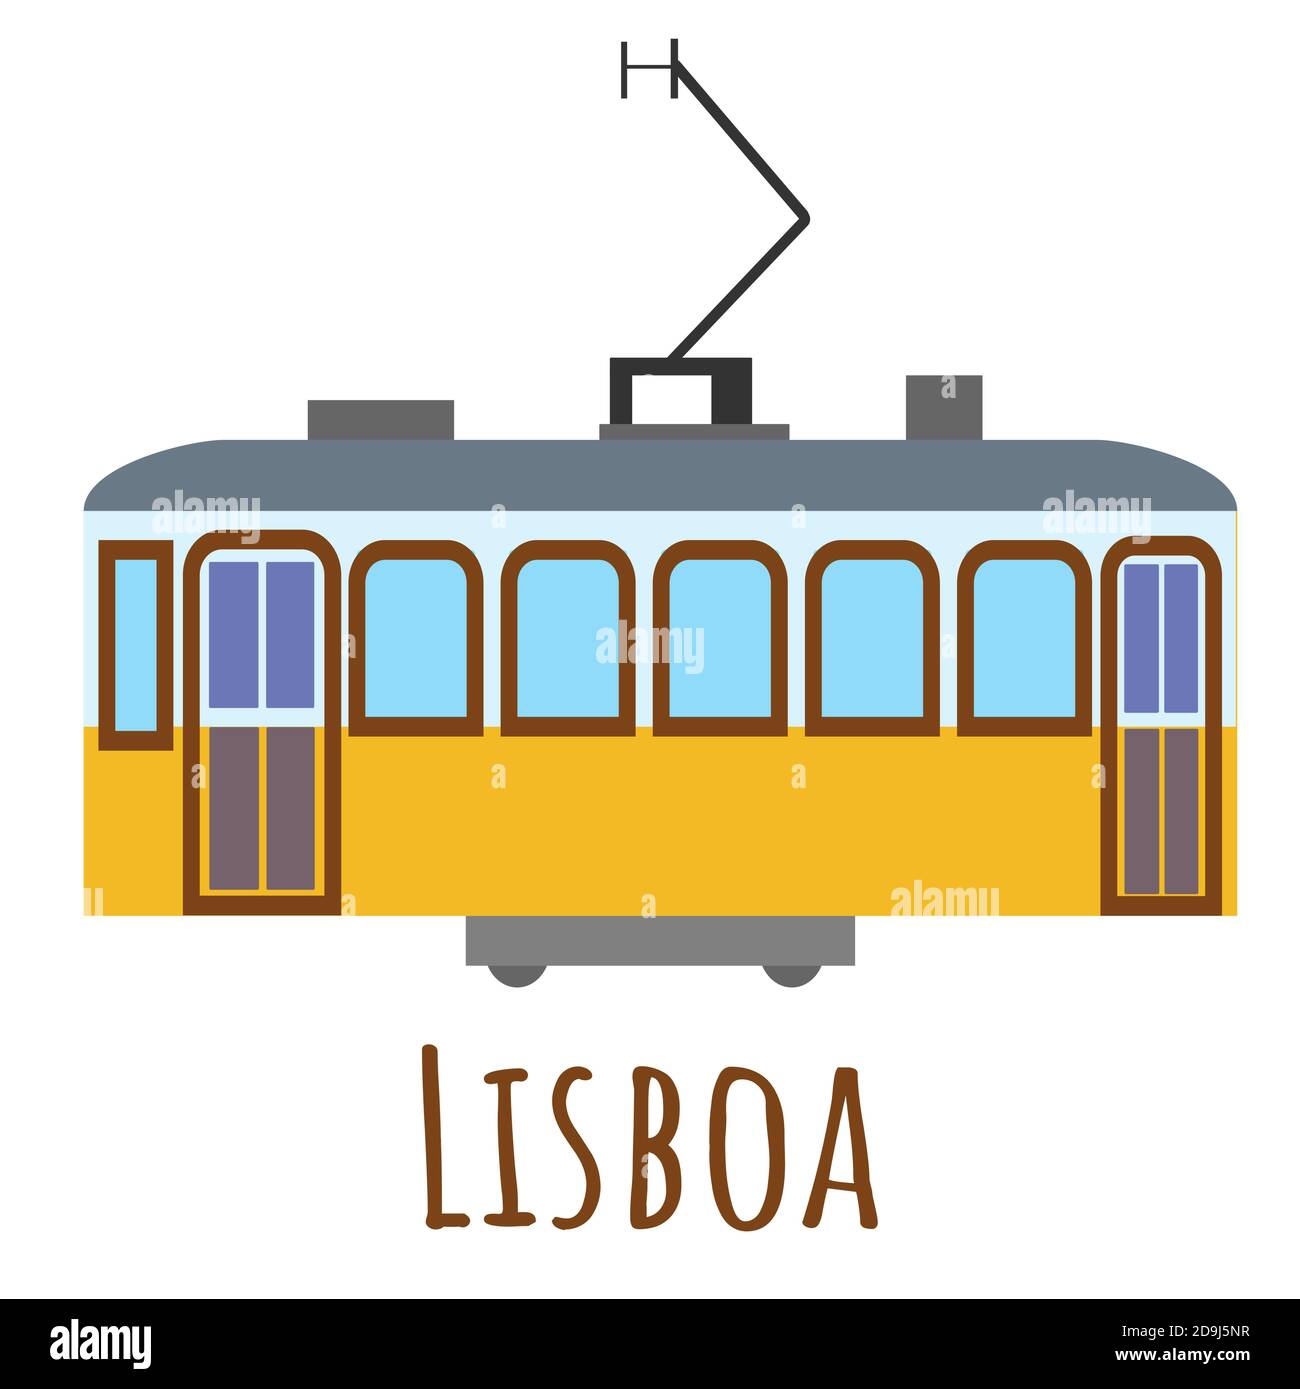 Flat style vintage yellow tram, symbol of Lisboa. Landmark icon for travelers. Vector illustration isolated on white background Stock Vector